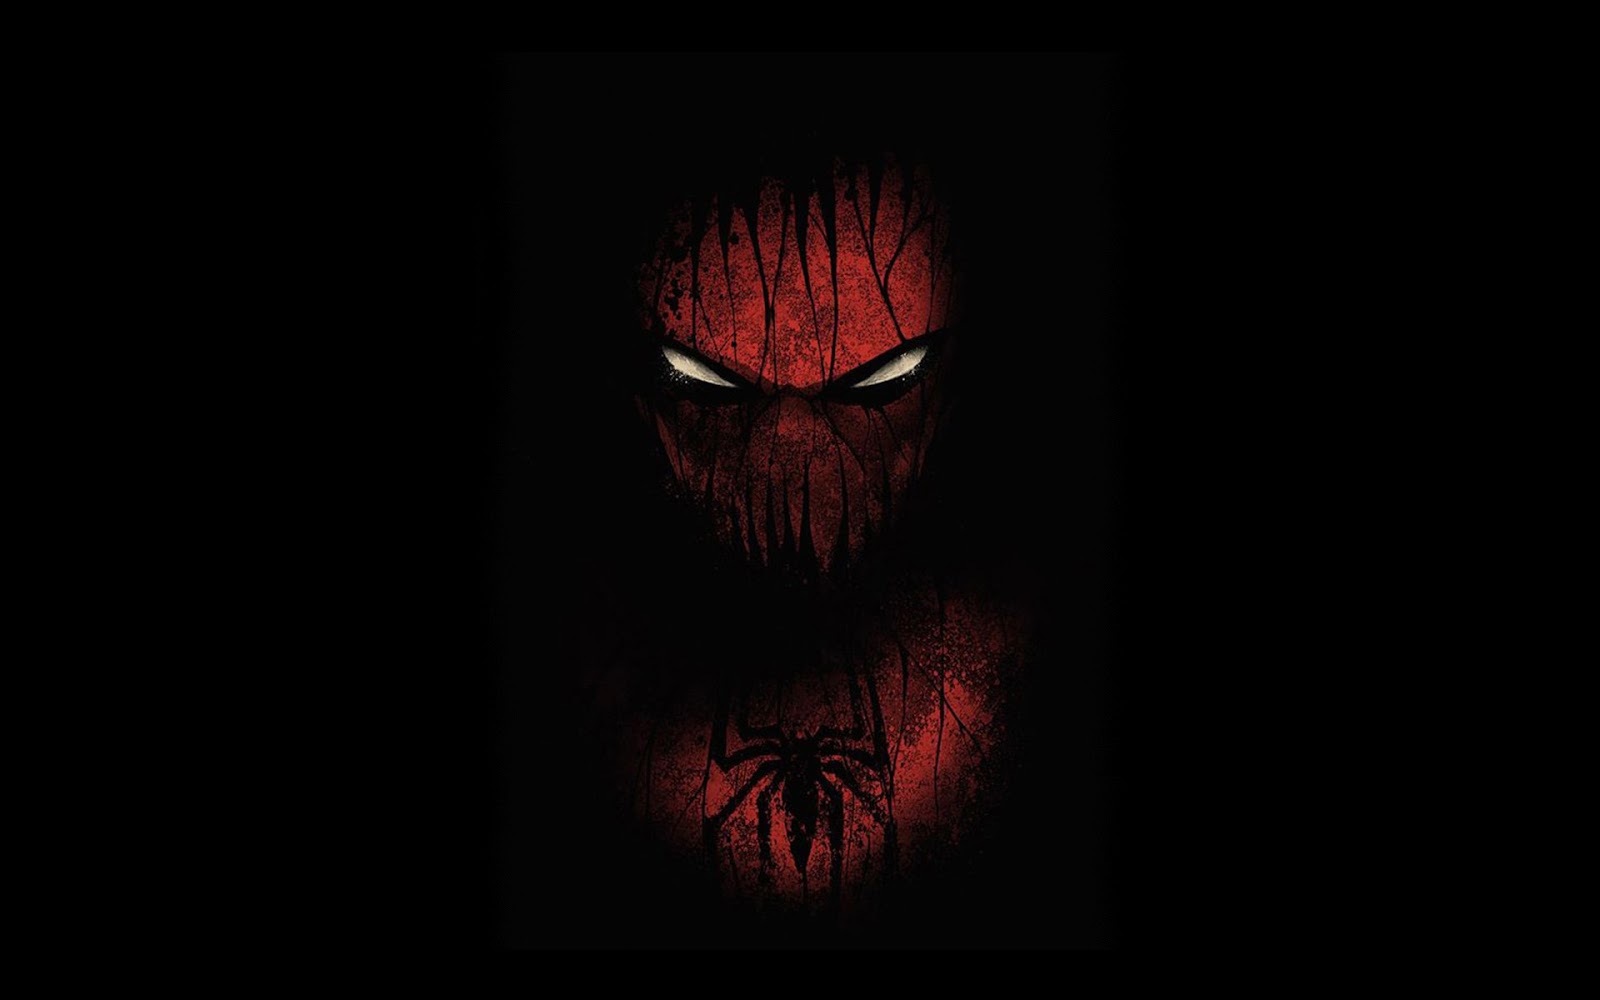 The Spiderman Wallpaper